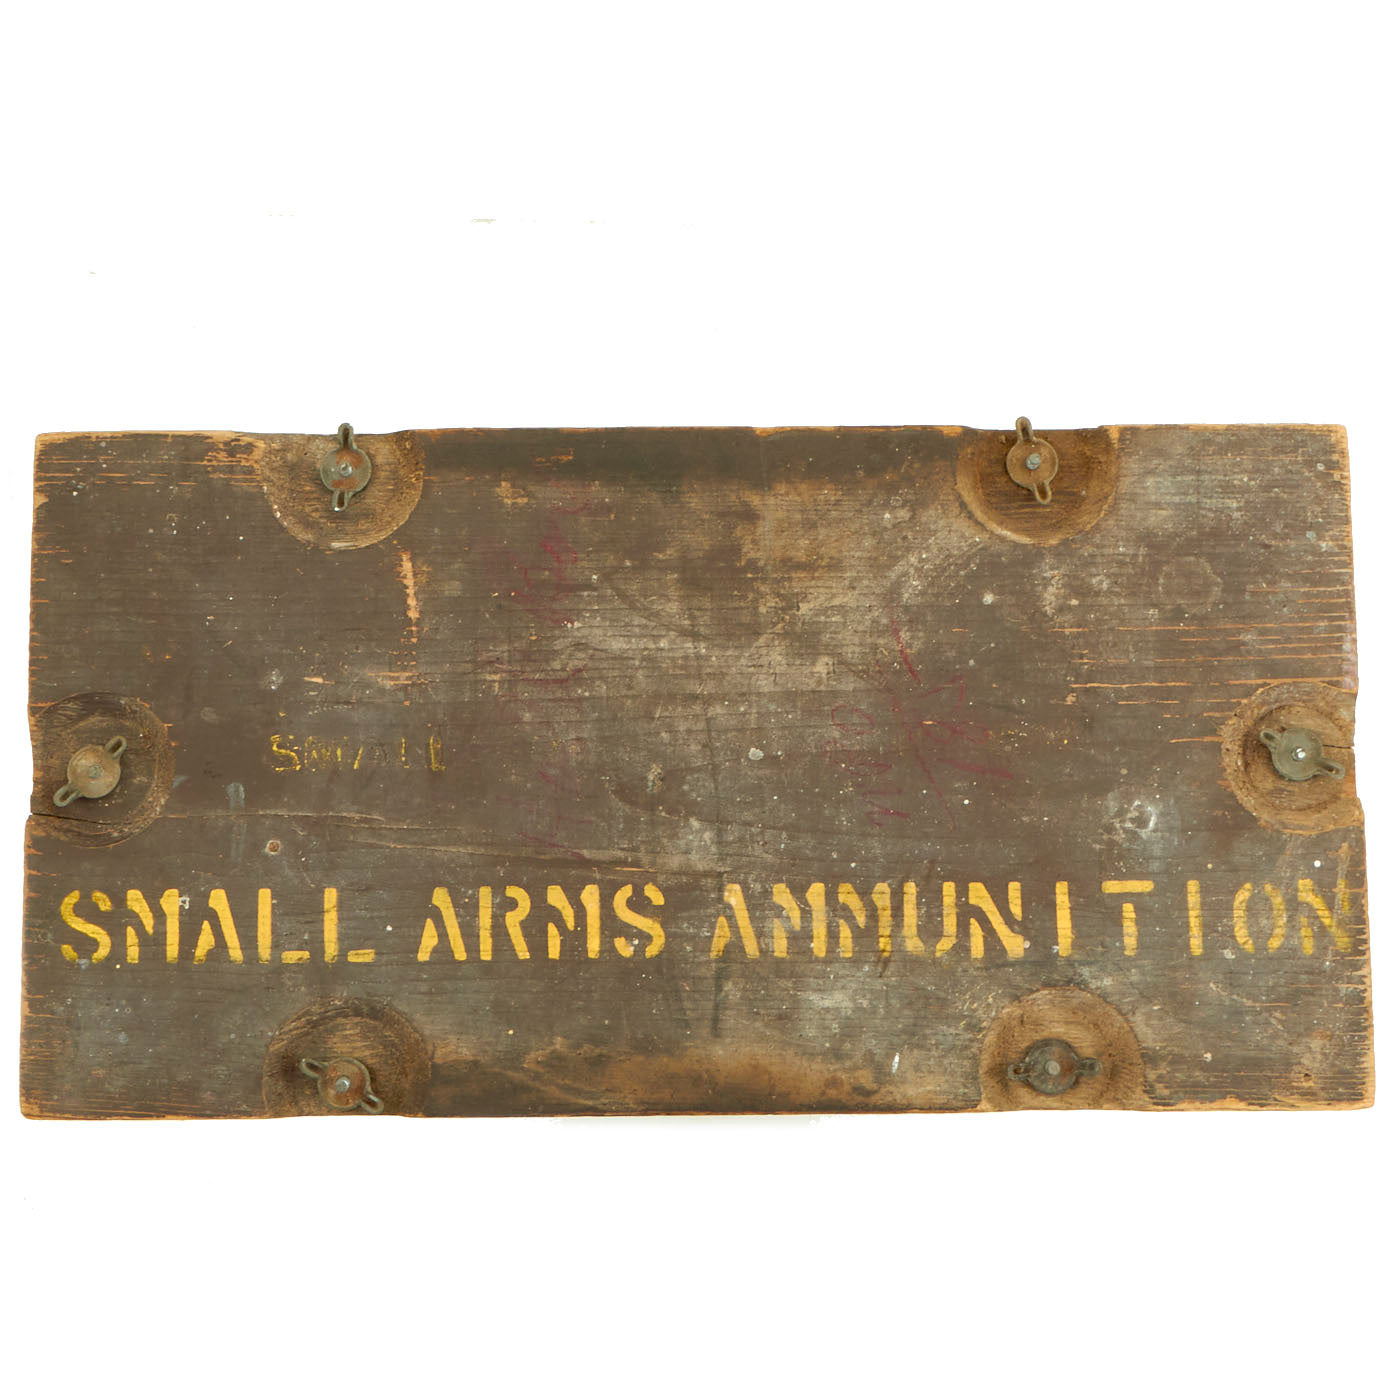 Original WWII U.S. Army Wooden Shotgun T3ABD 12 Gauge No.00 Buckshot M –  International Military Antiques